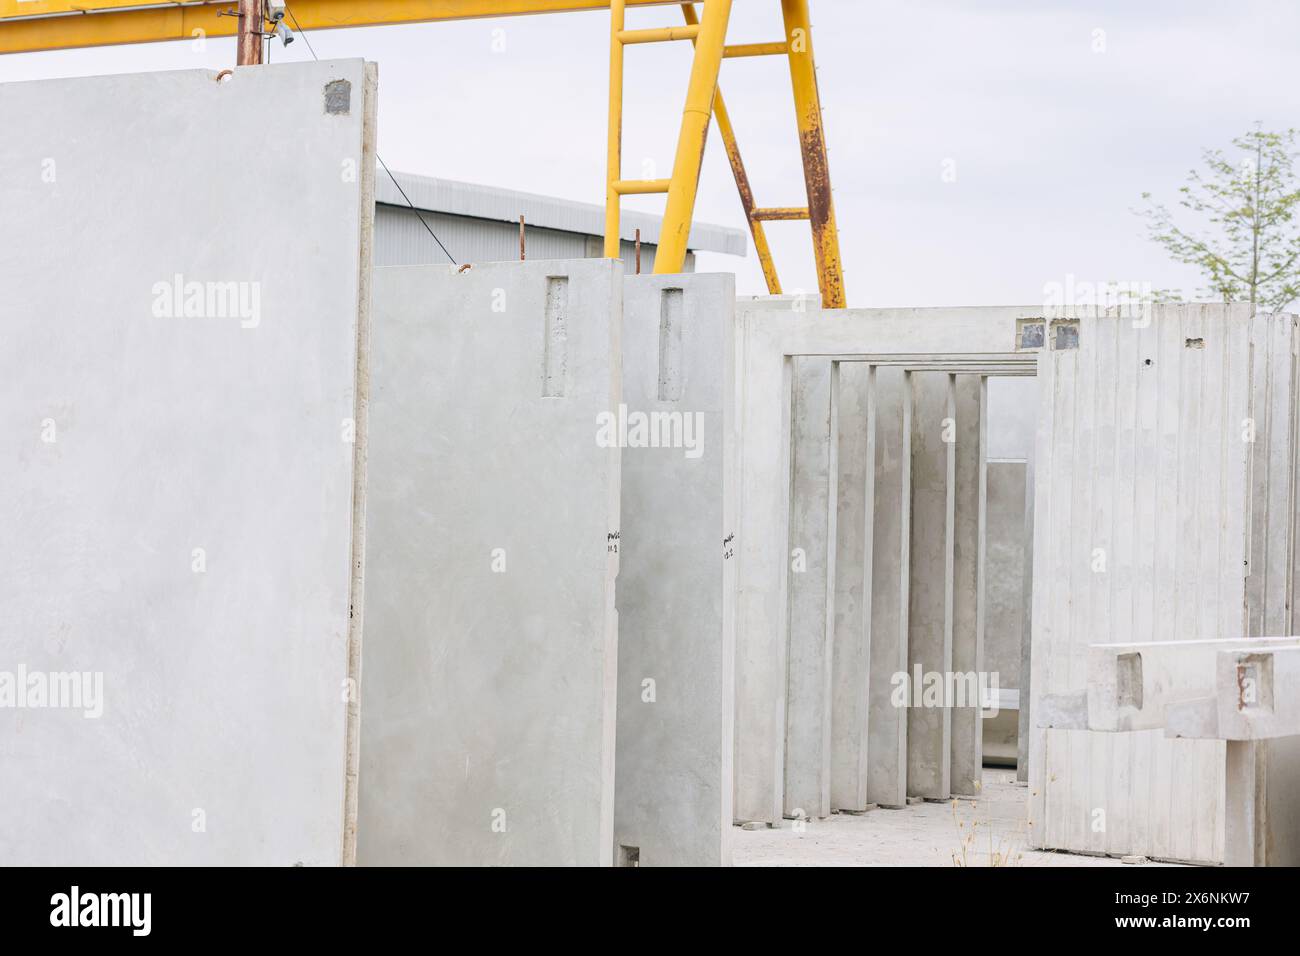 Fertigbeton-Gießanlage, Zementprodukte große Baustellenindustrie. Stockfoto